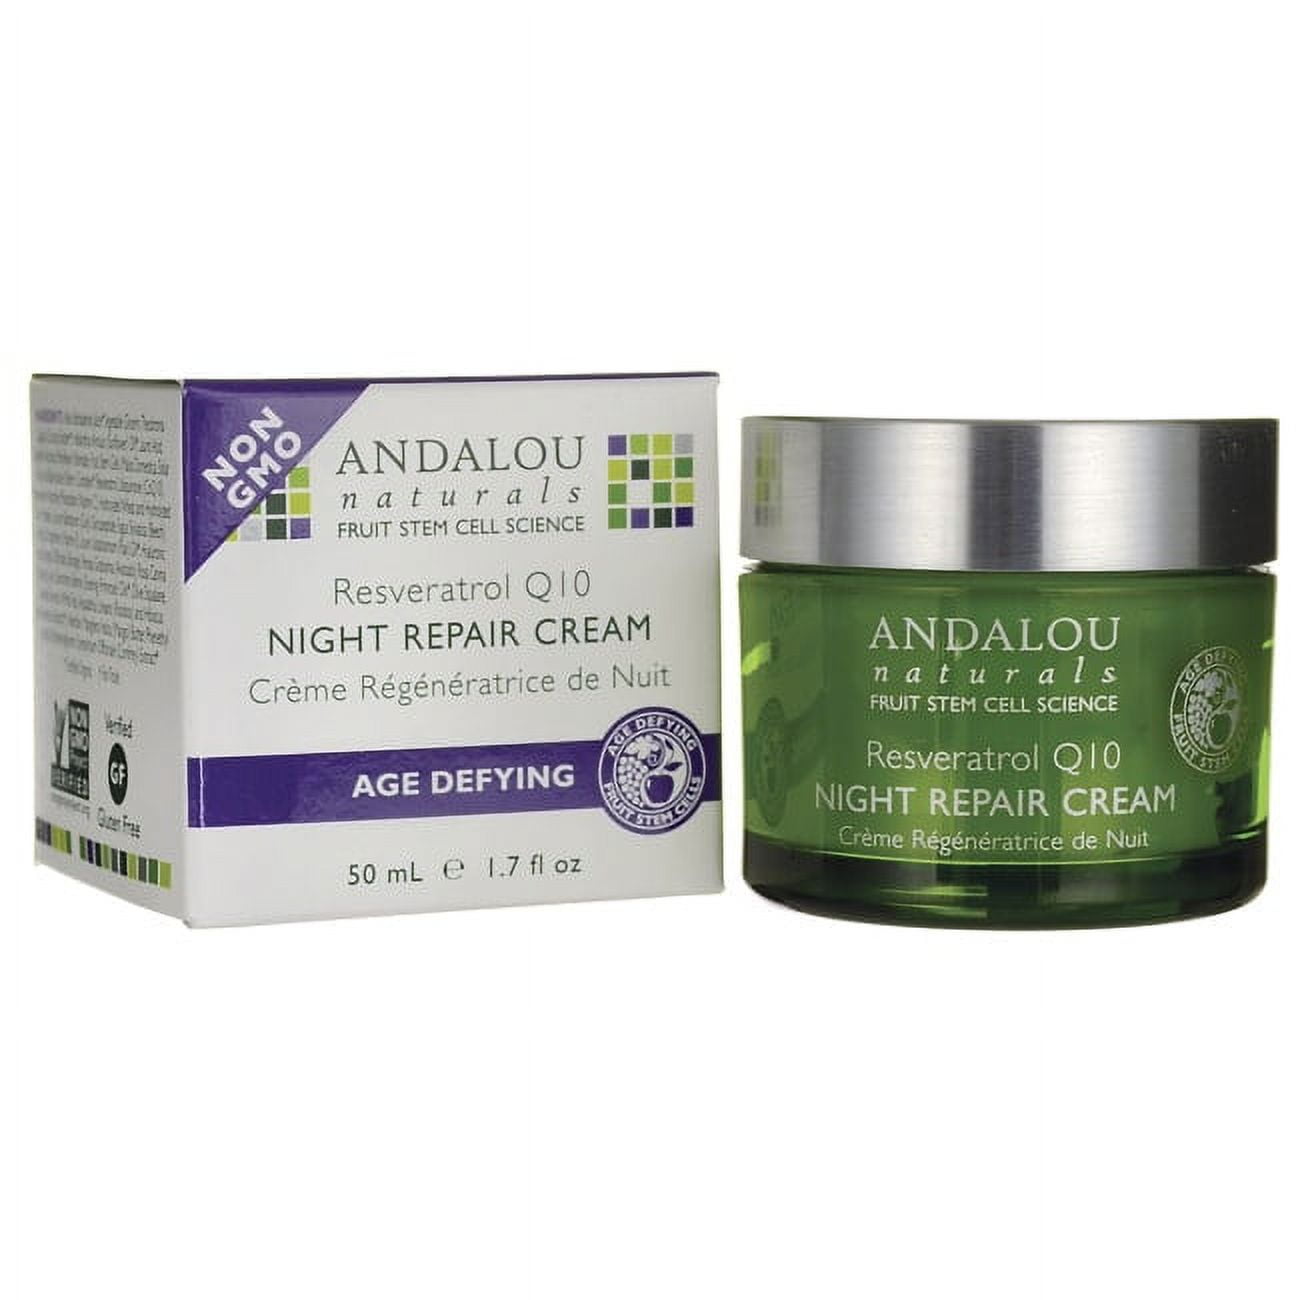 Andalou Naturals Resveratrol Q10 Night Repair Cream, Age Defying Formula 1.7 oz Bottle